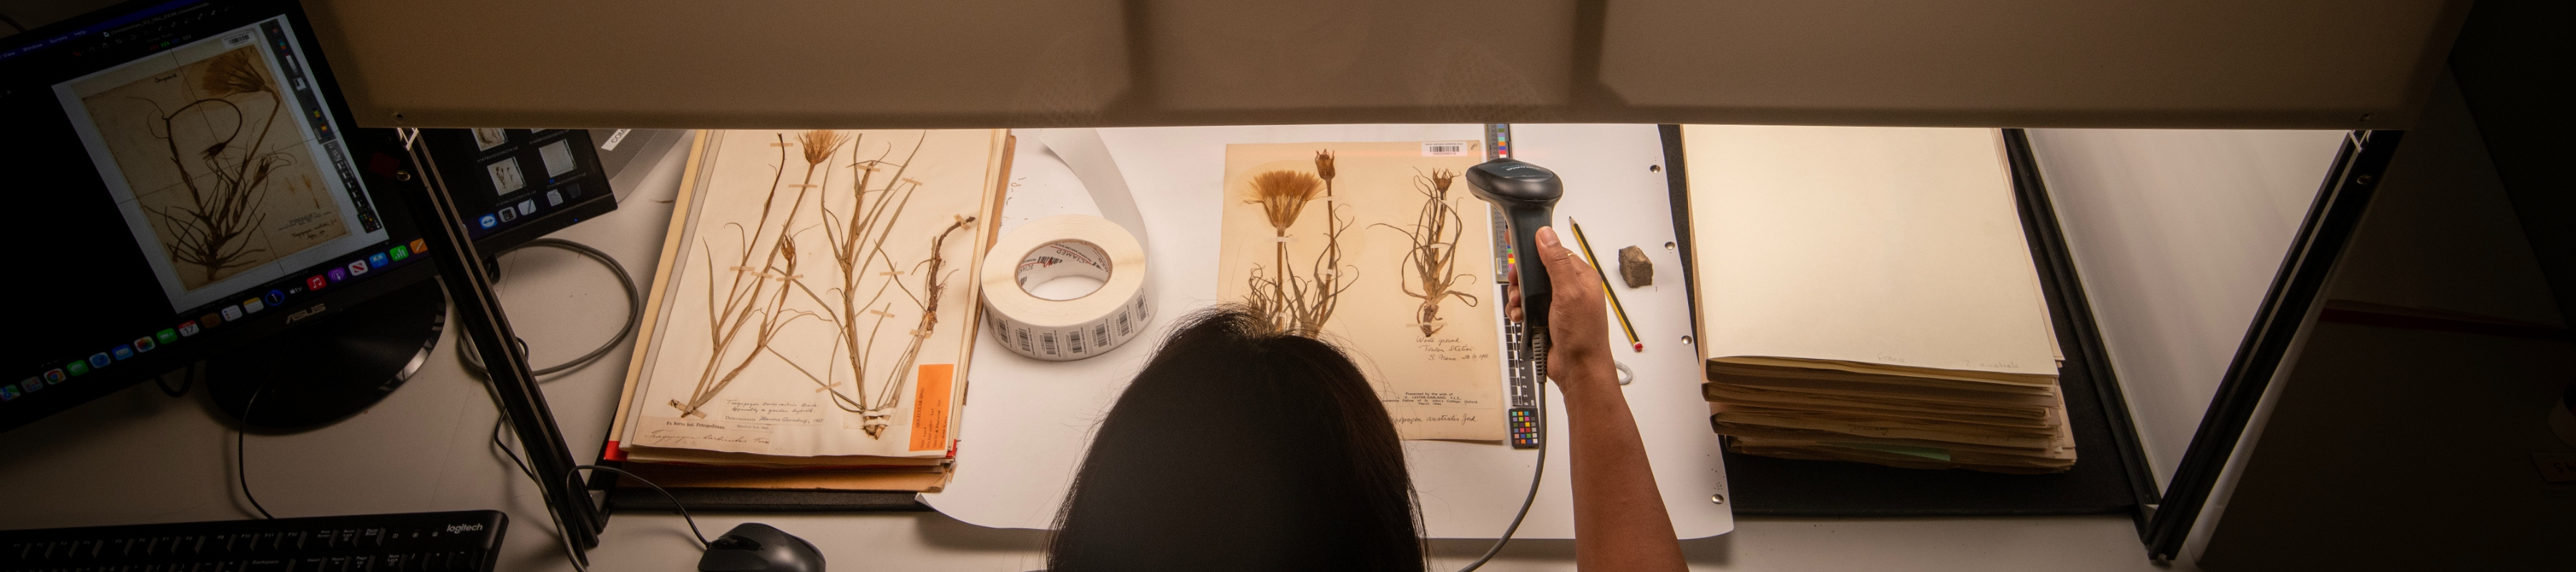 Digitiser holding barcoder to digitise specimen as part of Kew's Digitisation Project